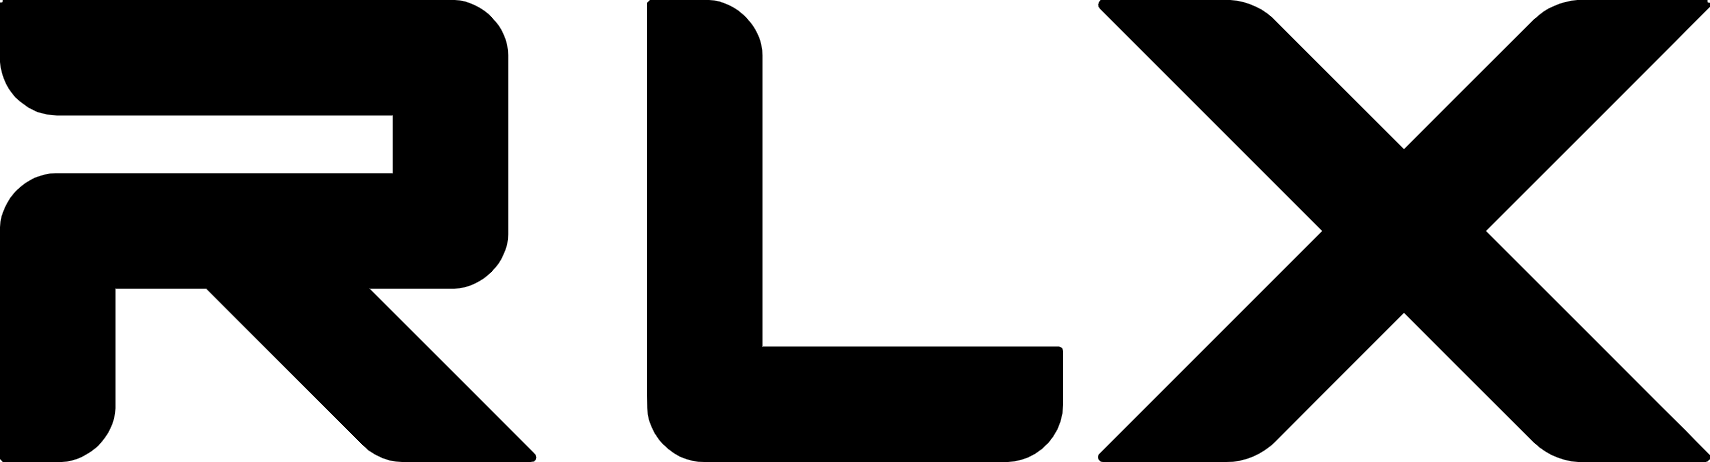 RLX Technology logo (transparent PNG)